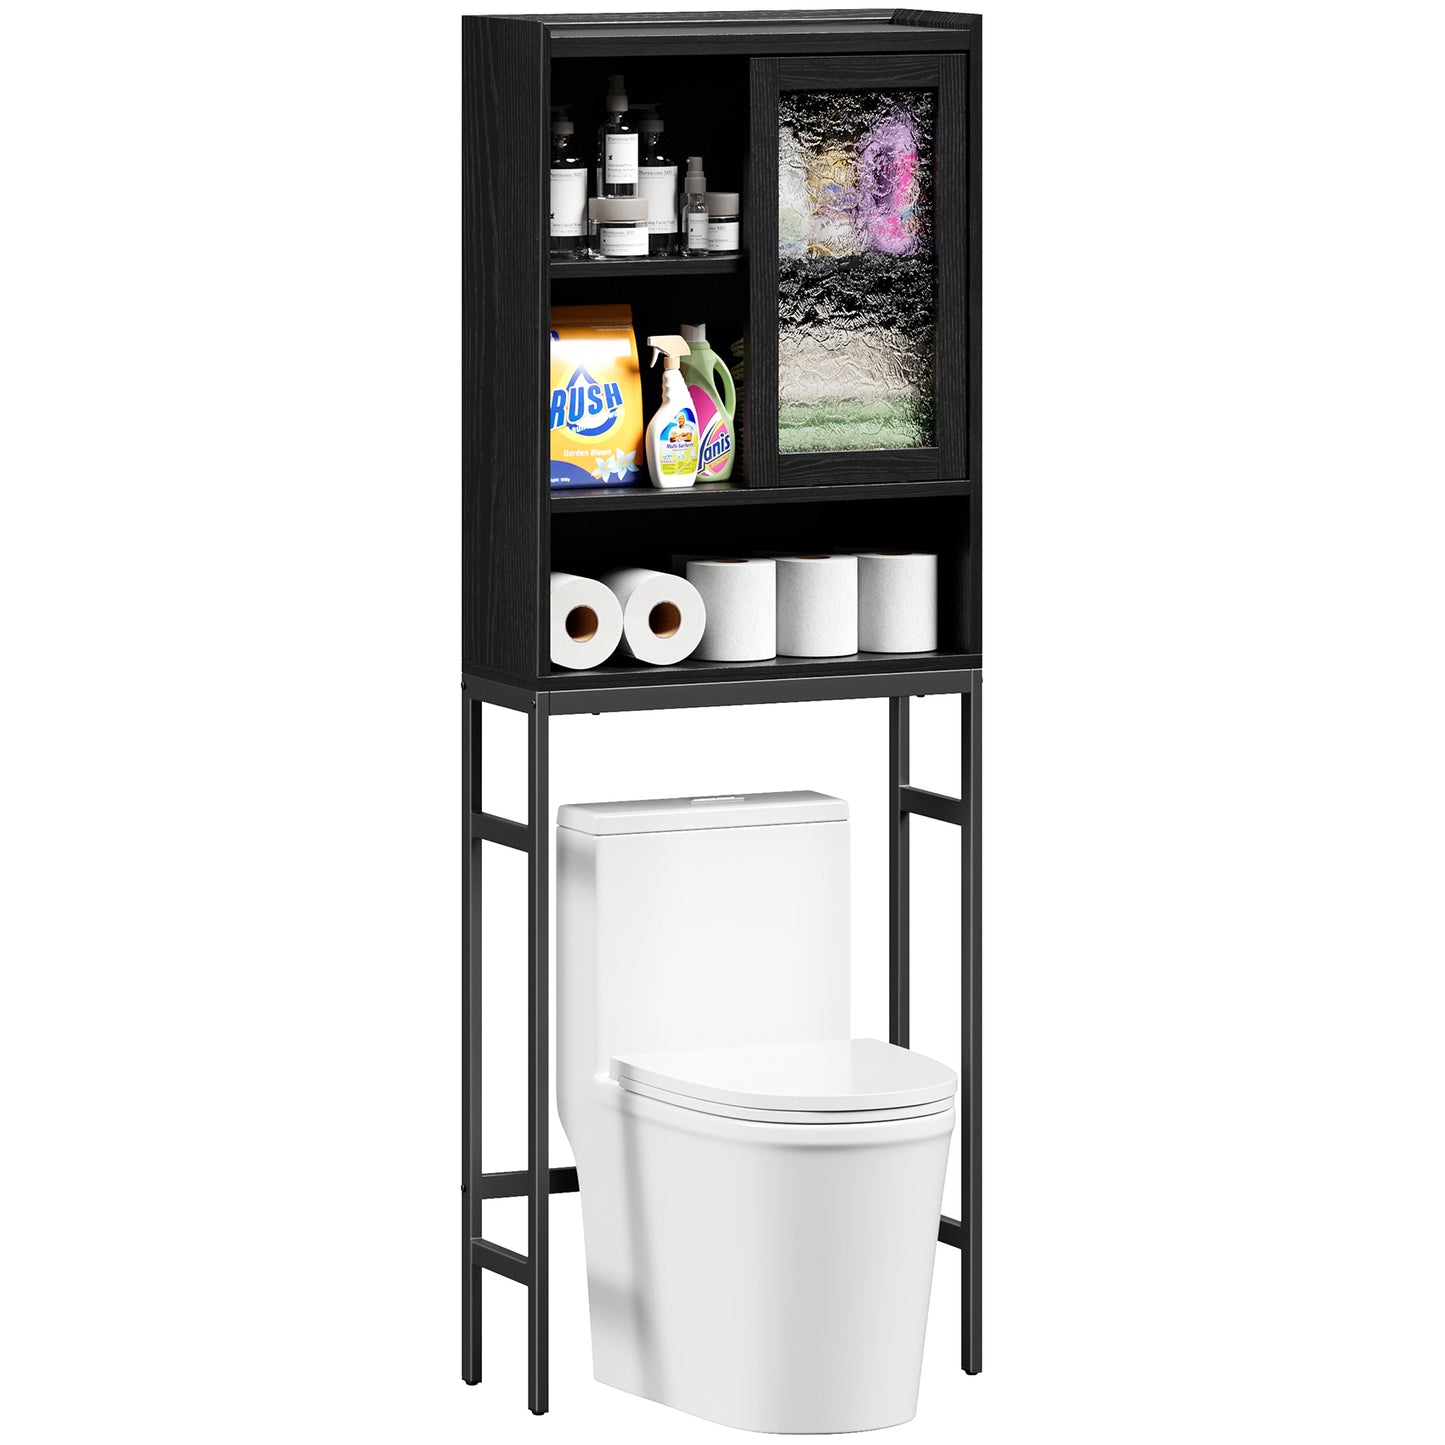 Mr IRONSTONE Over The Toilet Storage Cabinet, Bathroom Space Saver w/Adjustable Shelf & Rack, Black